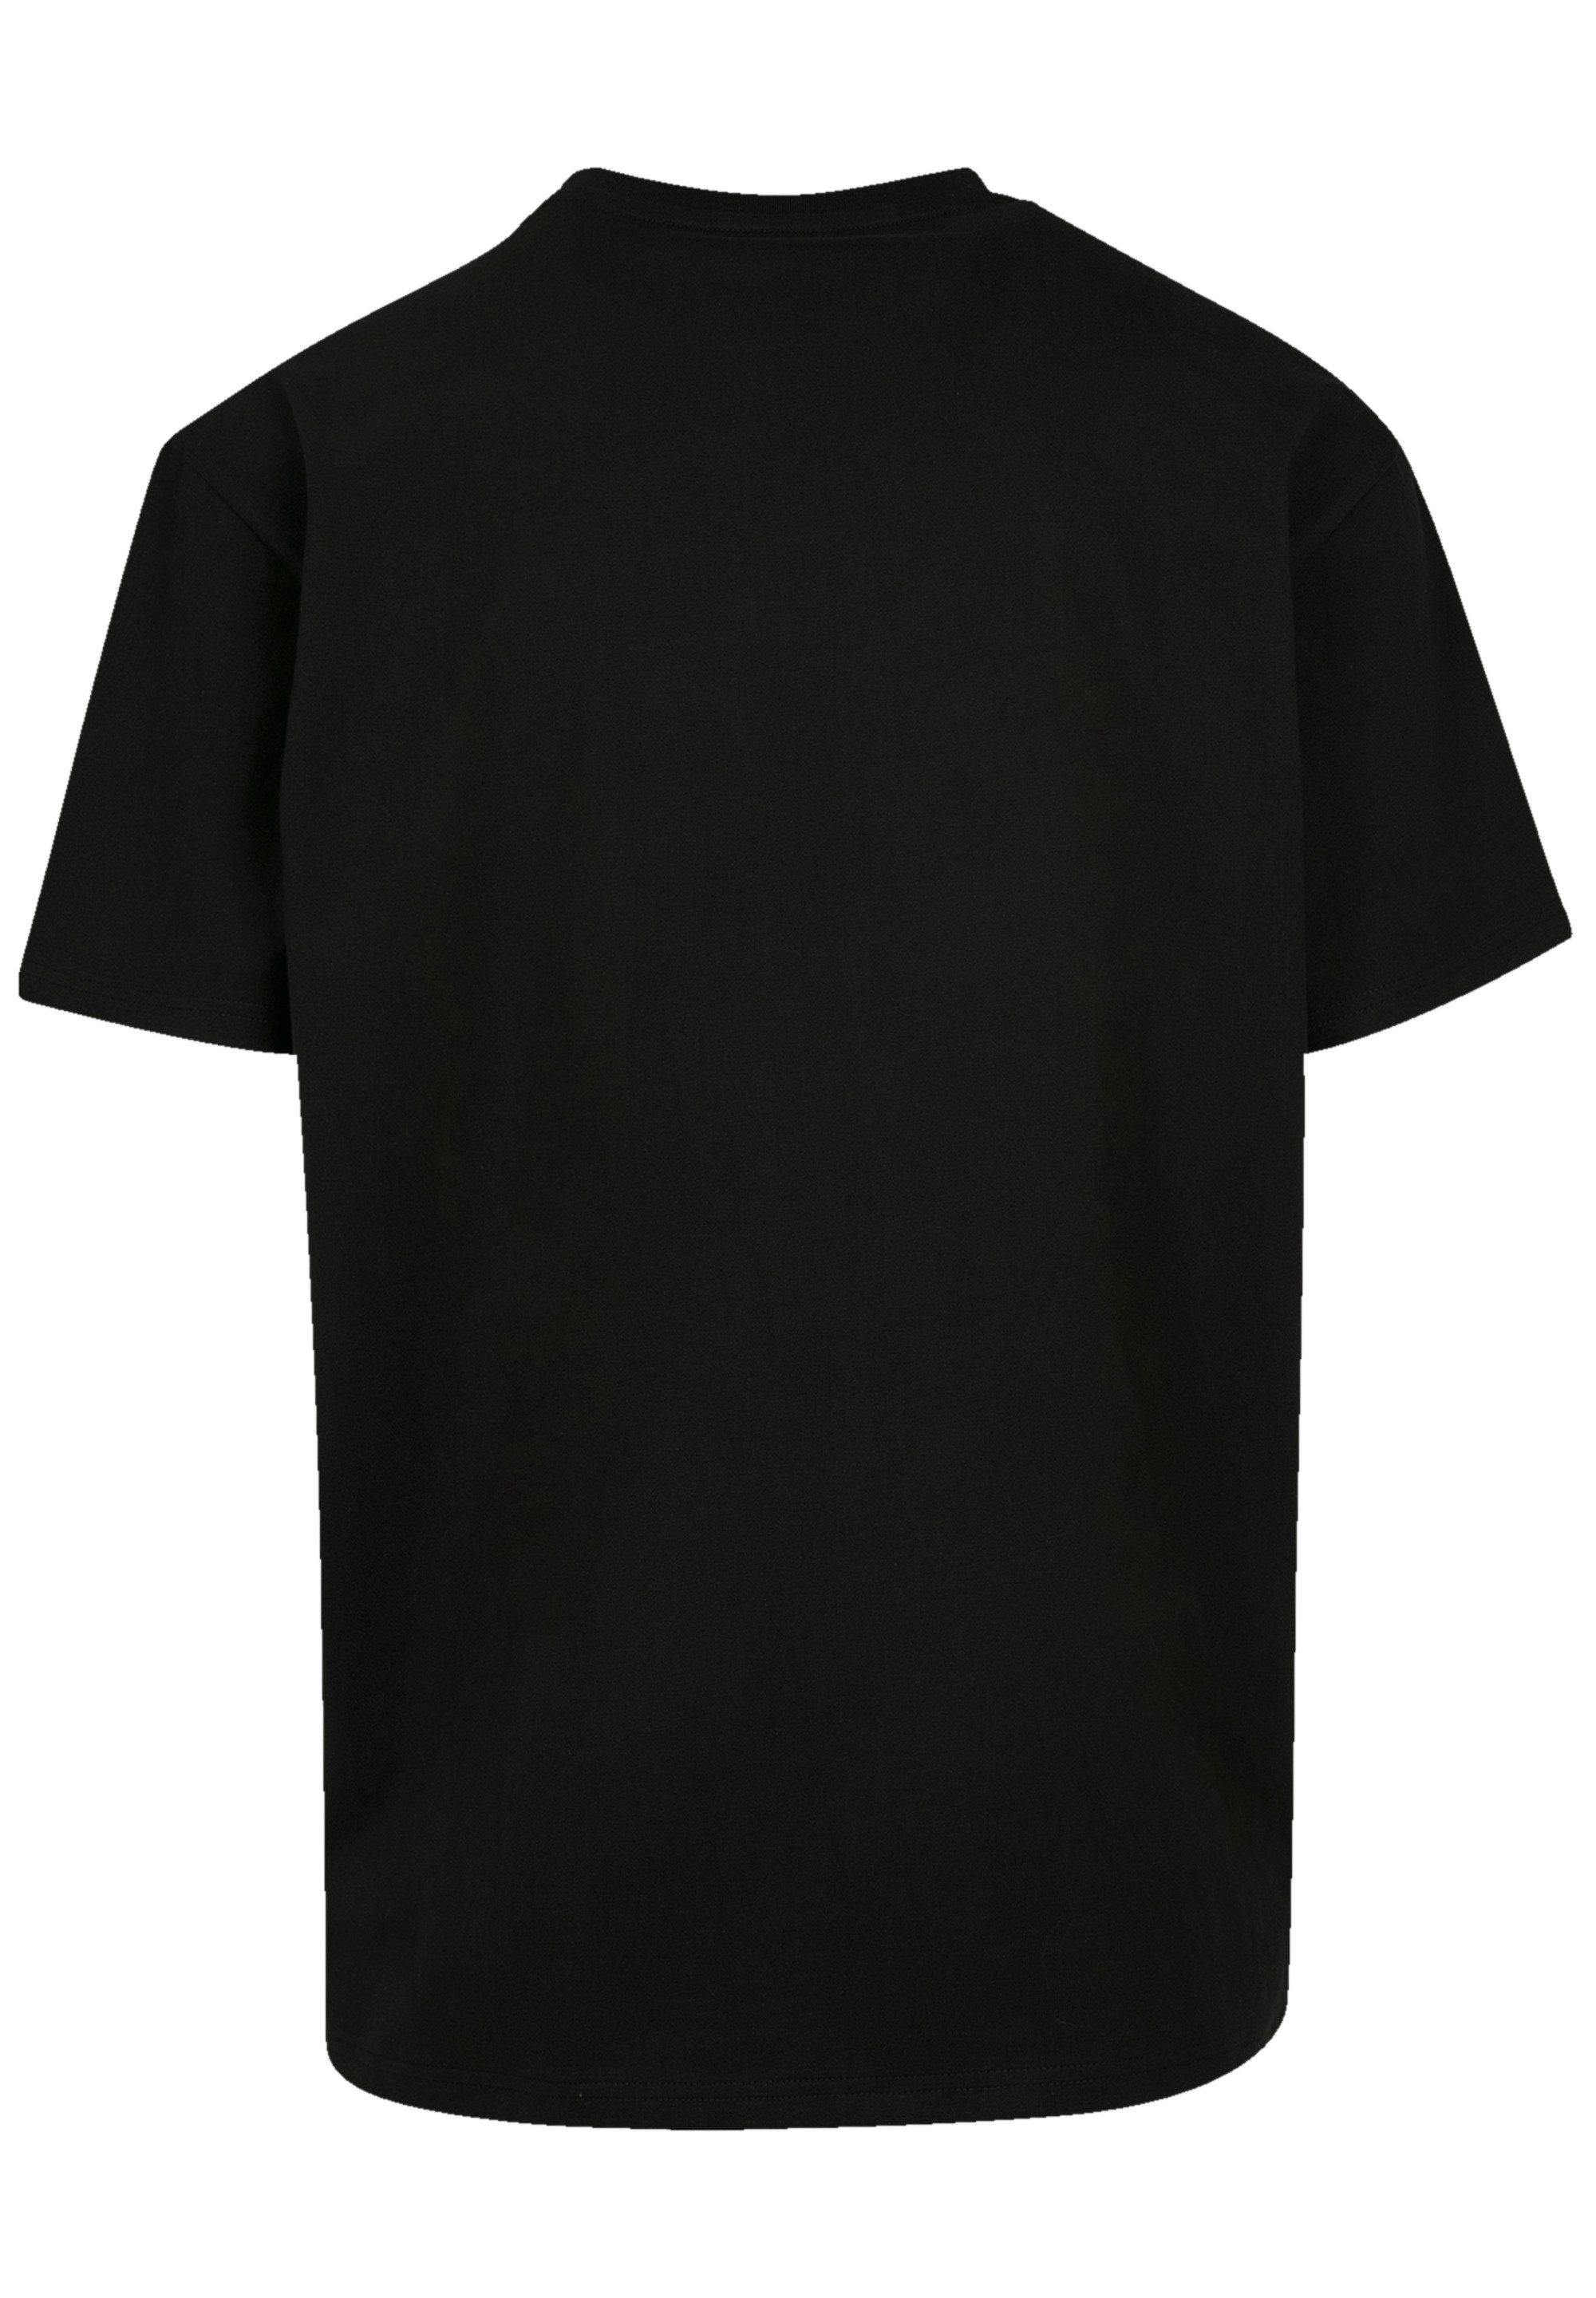 Rush T-Shirt Starman F4NT4STIC Band Rock Premium schwarz Qualität